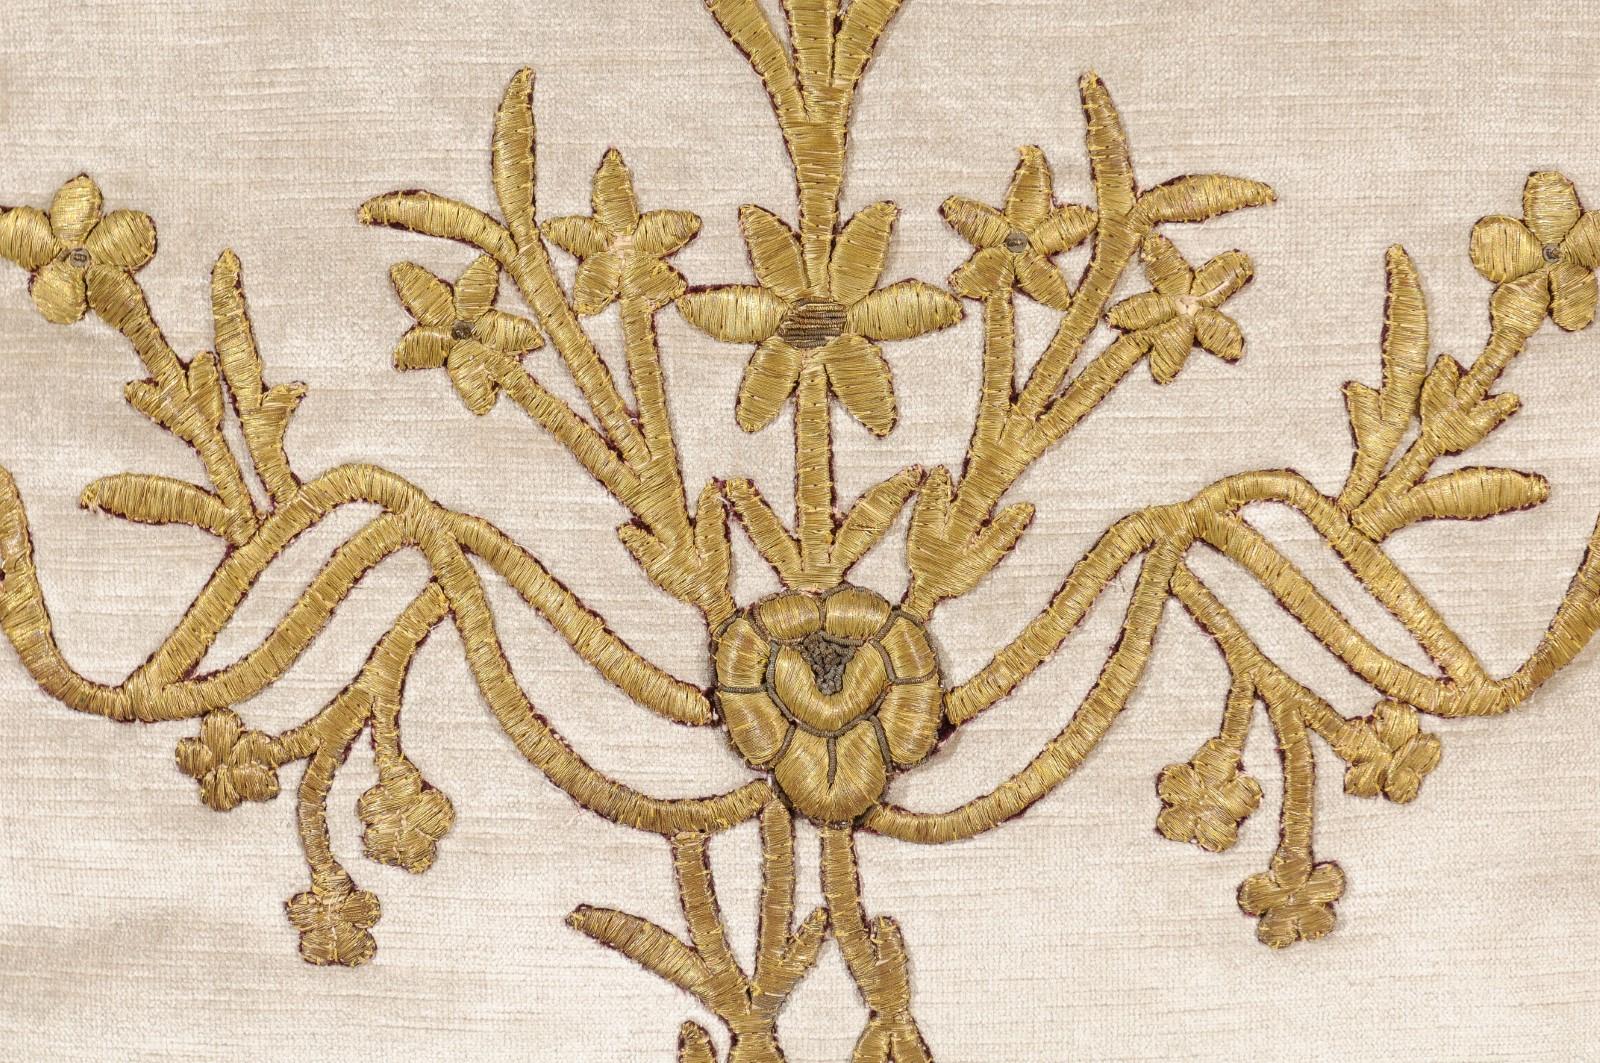 Contemporary Antique Ottoman Empire Raised Gold Metallic Embroidery on Silver Velvet Pillows For Sale